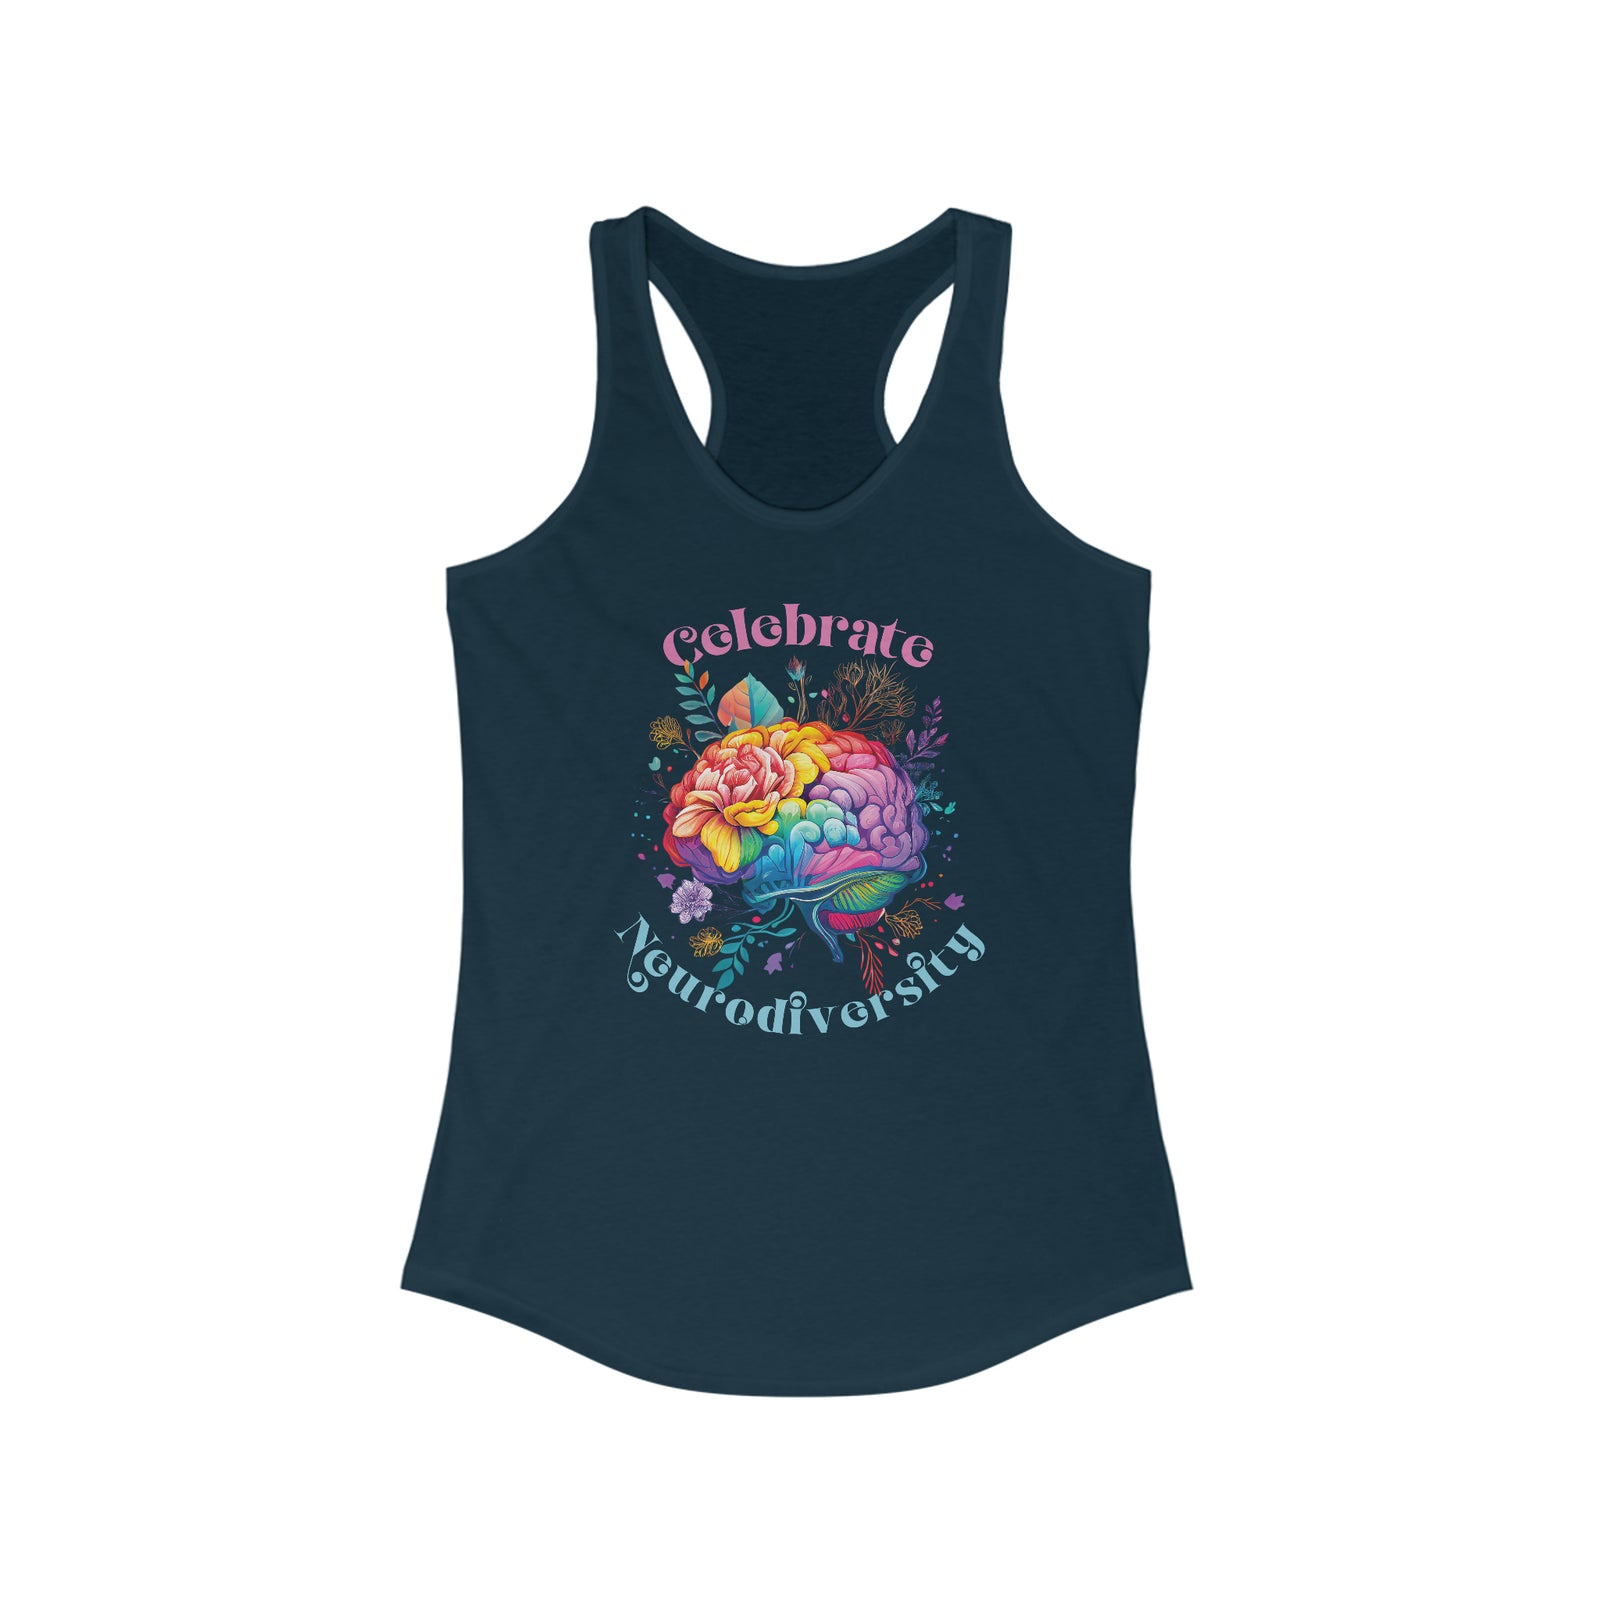 Celebrate Neurodiversity Shirt | Autism Shirt | Autism Awareness Shirt | Inclusion Shirt | Brain Art | Super Soft Tshirt | Women's Slim Fit Racerback Tank Top